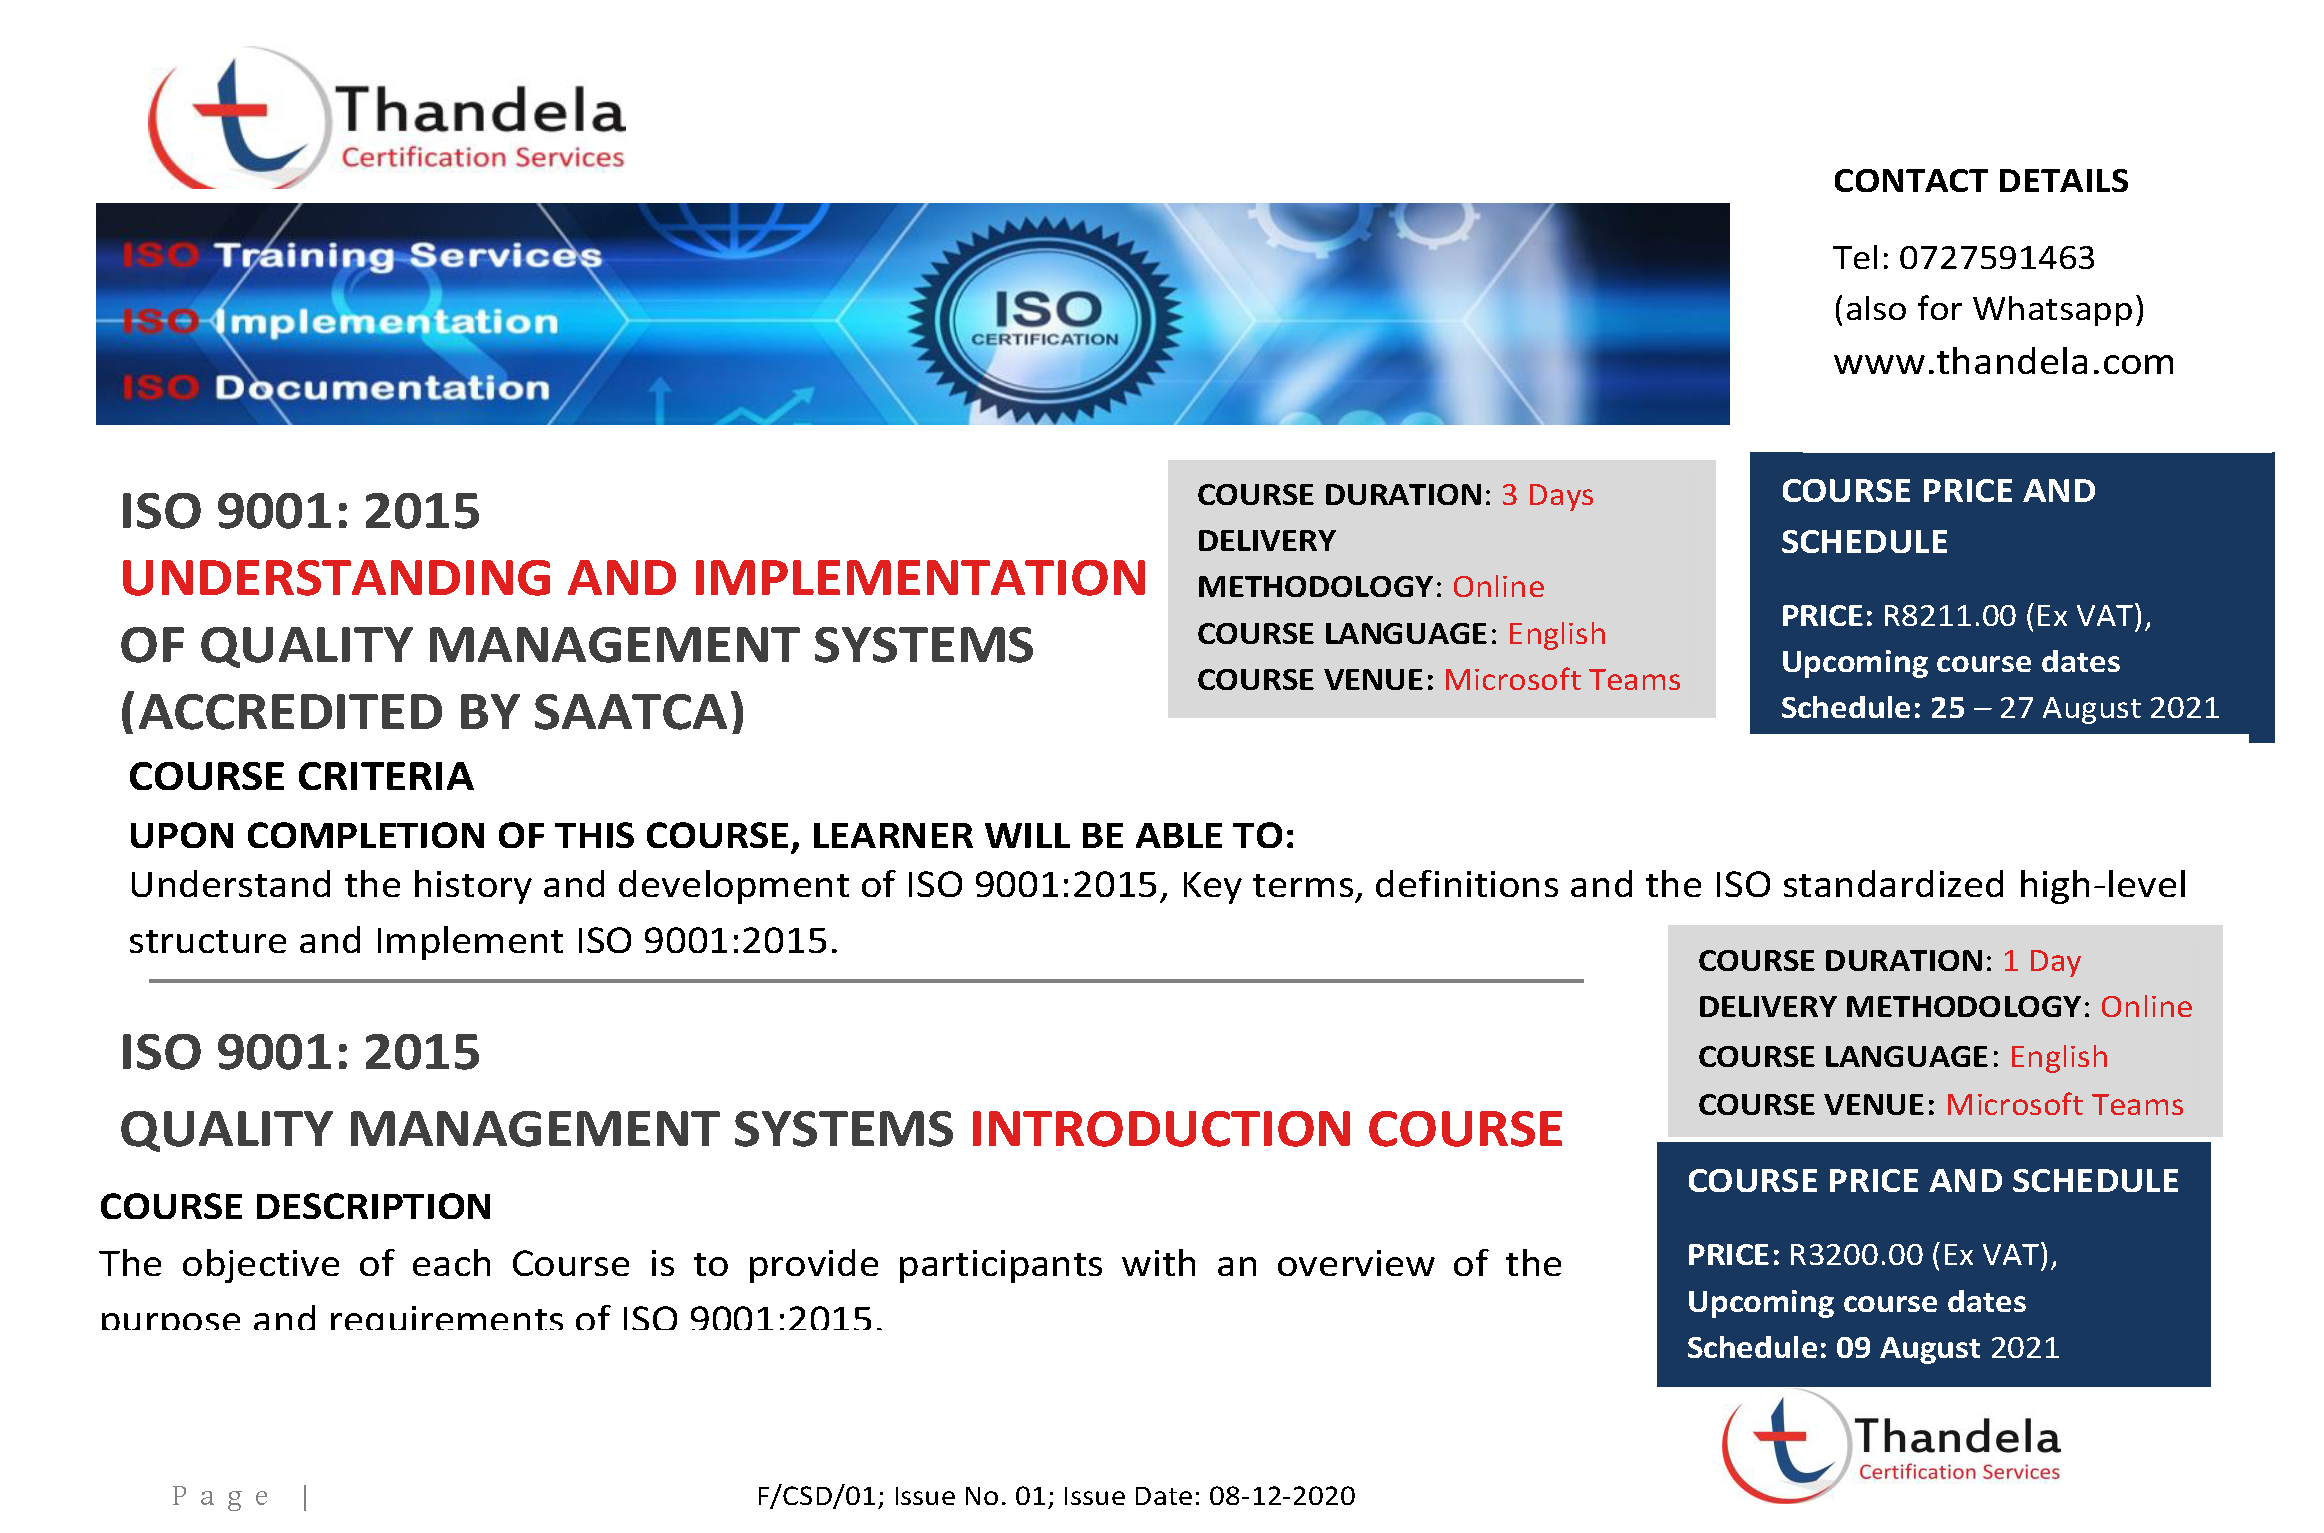 Thandela Certification Services - Online Courses